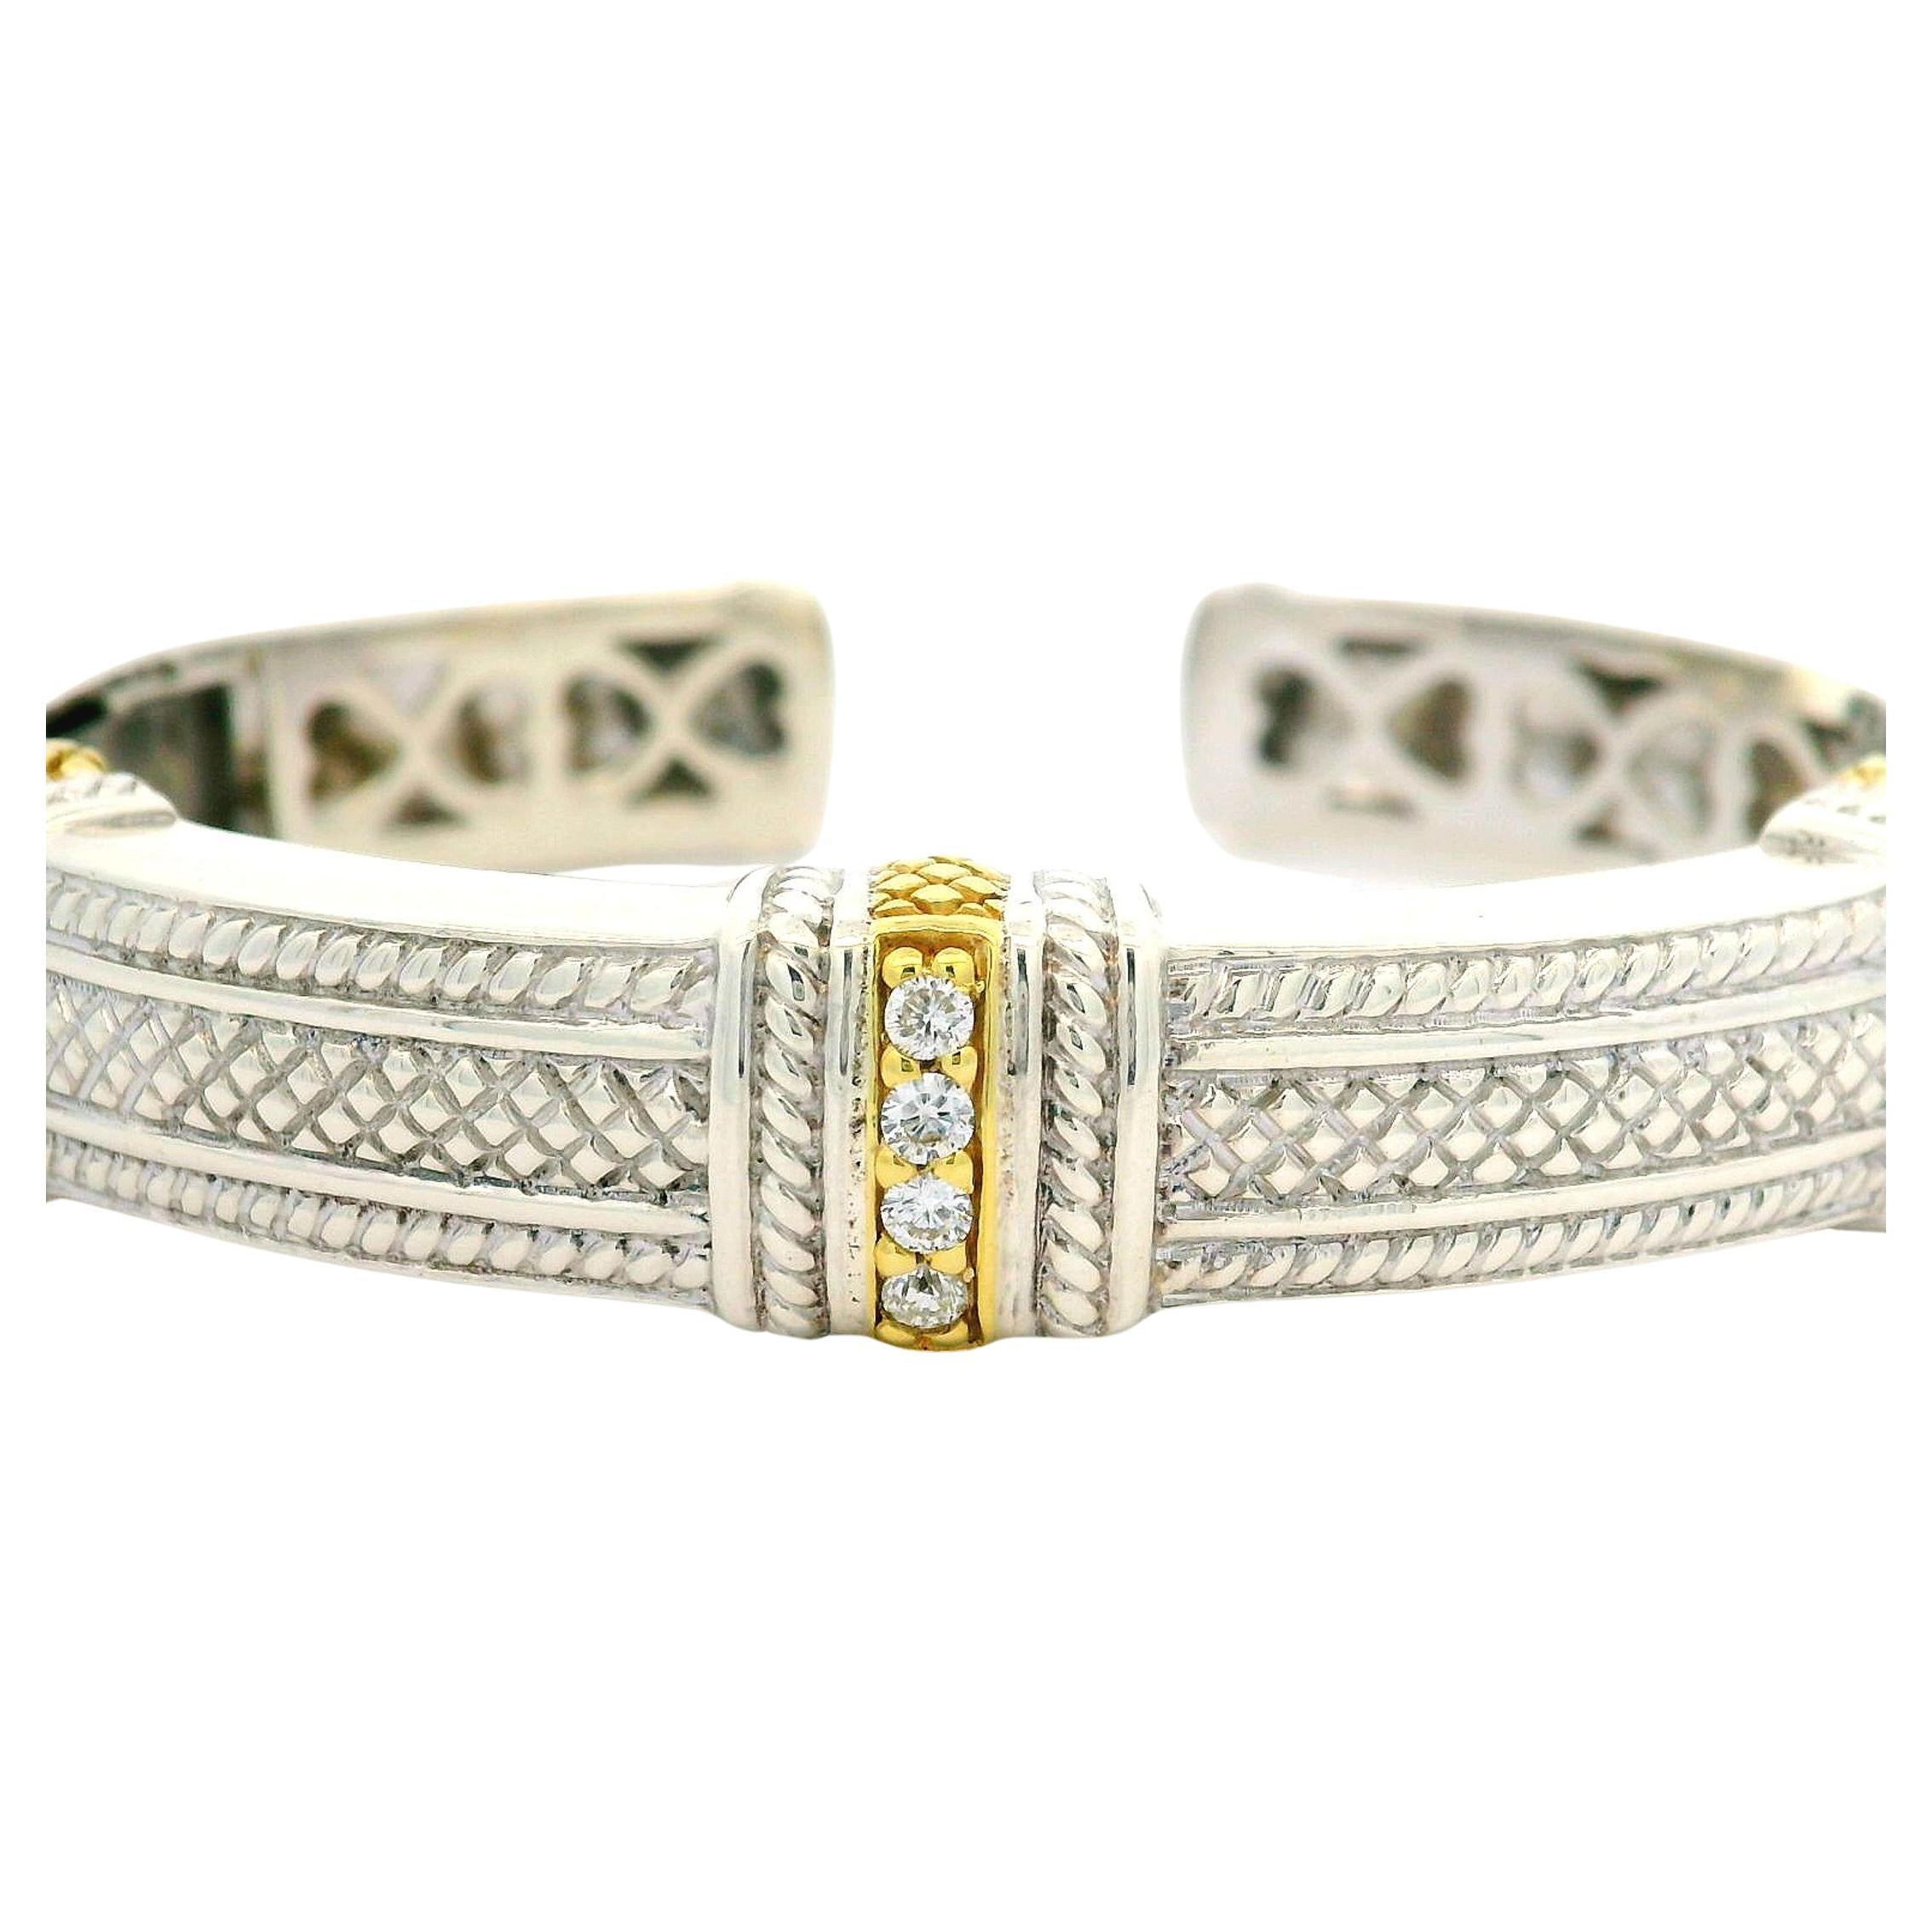 Sterling Silver Diamond Judith Ripka Twisted Rope Design Cuff Bangle Bracelet